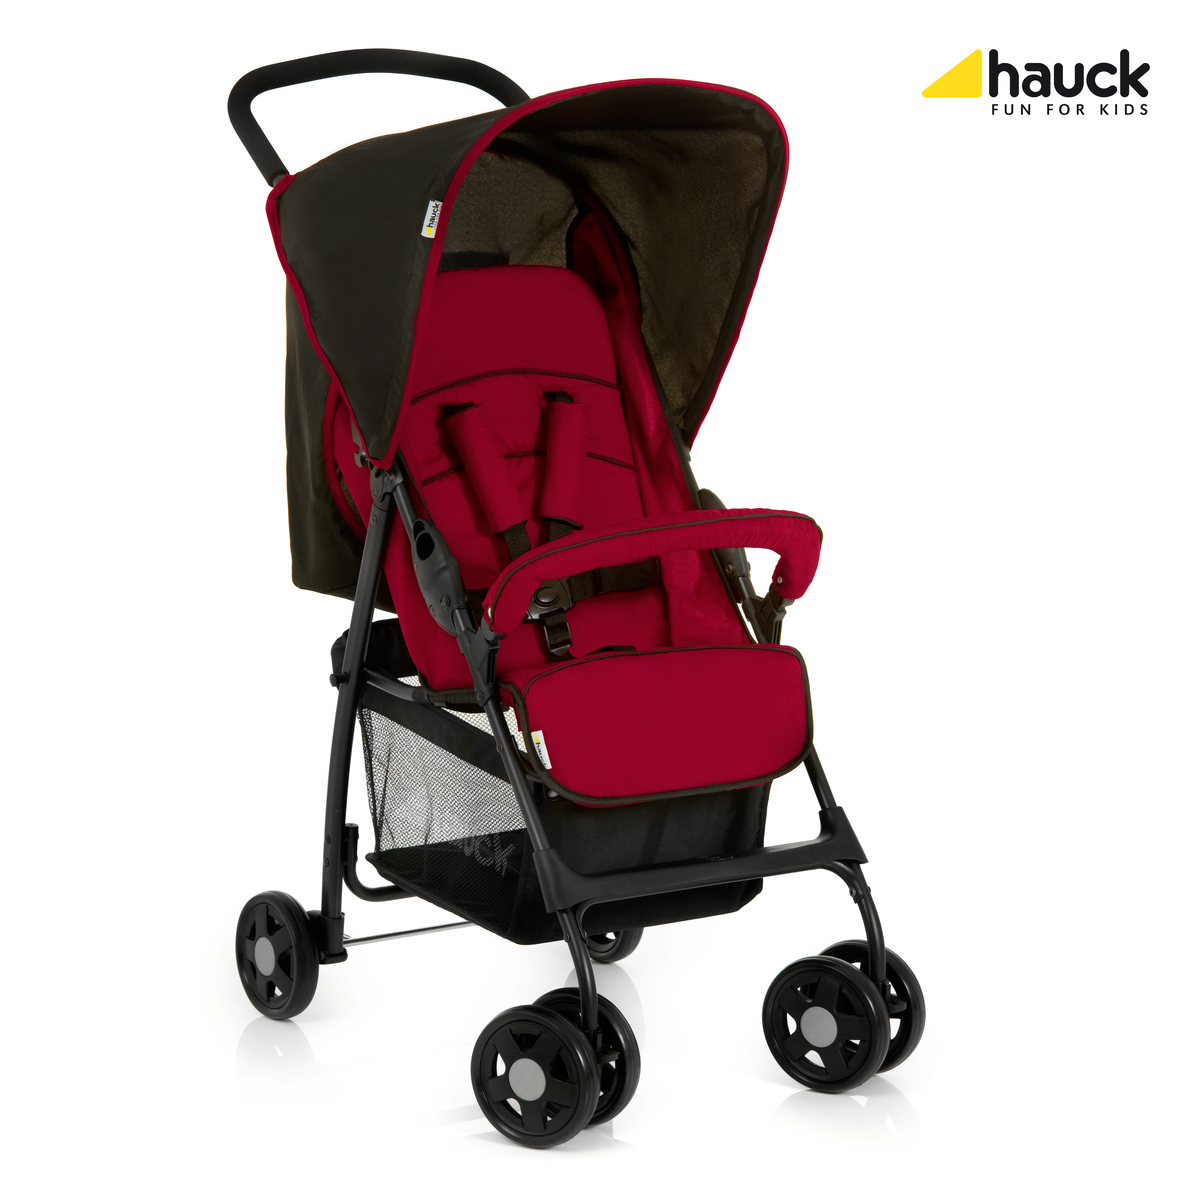 hauck baby strollers